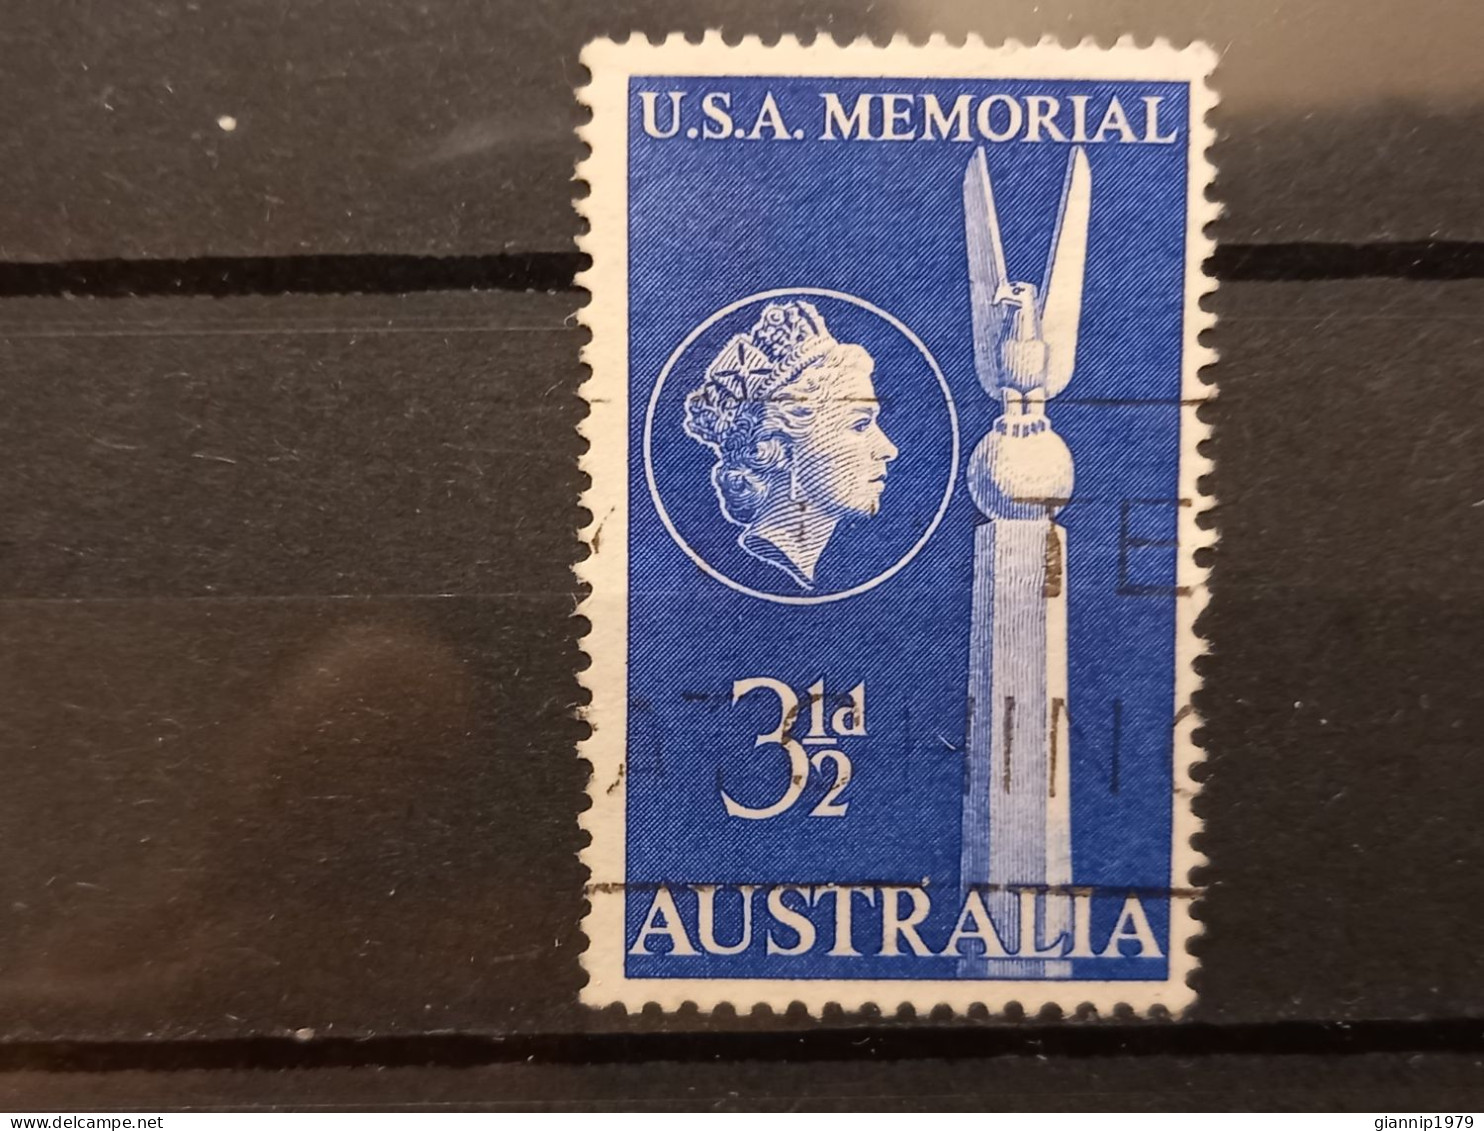 FRANCOBOLLI STAMPS AUSTRALIA AUSTRALIAN 1955 USED 13 ANNI ANNIVERSARY BATTLE MAR DEI CARALE OBLITERE' - Used Stamps